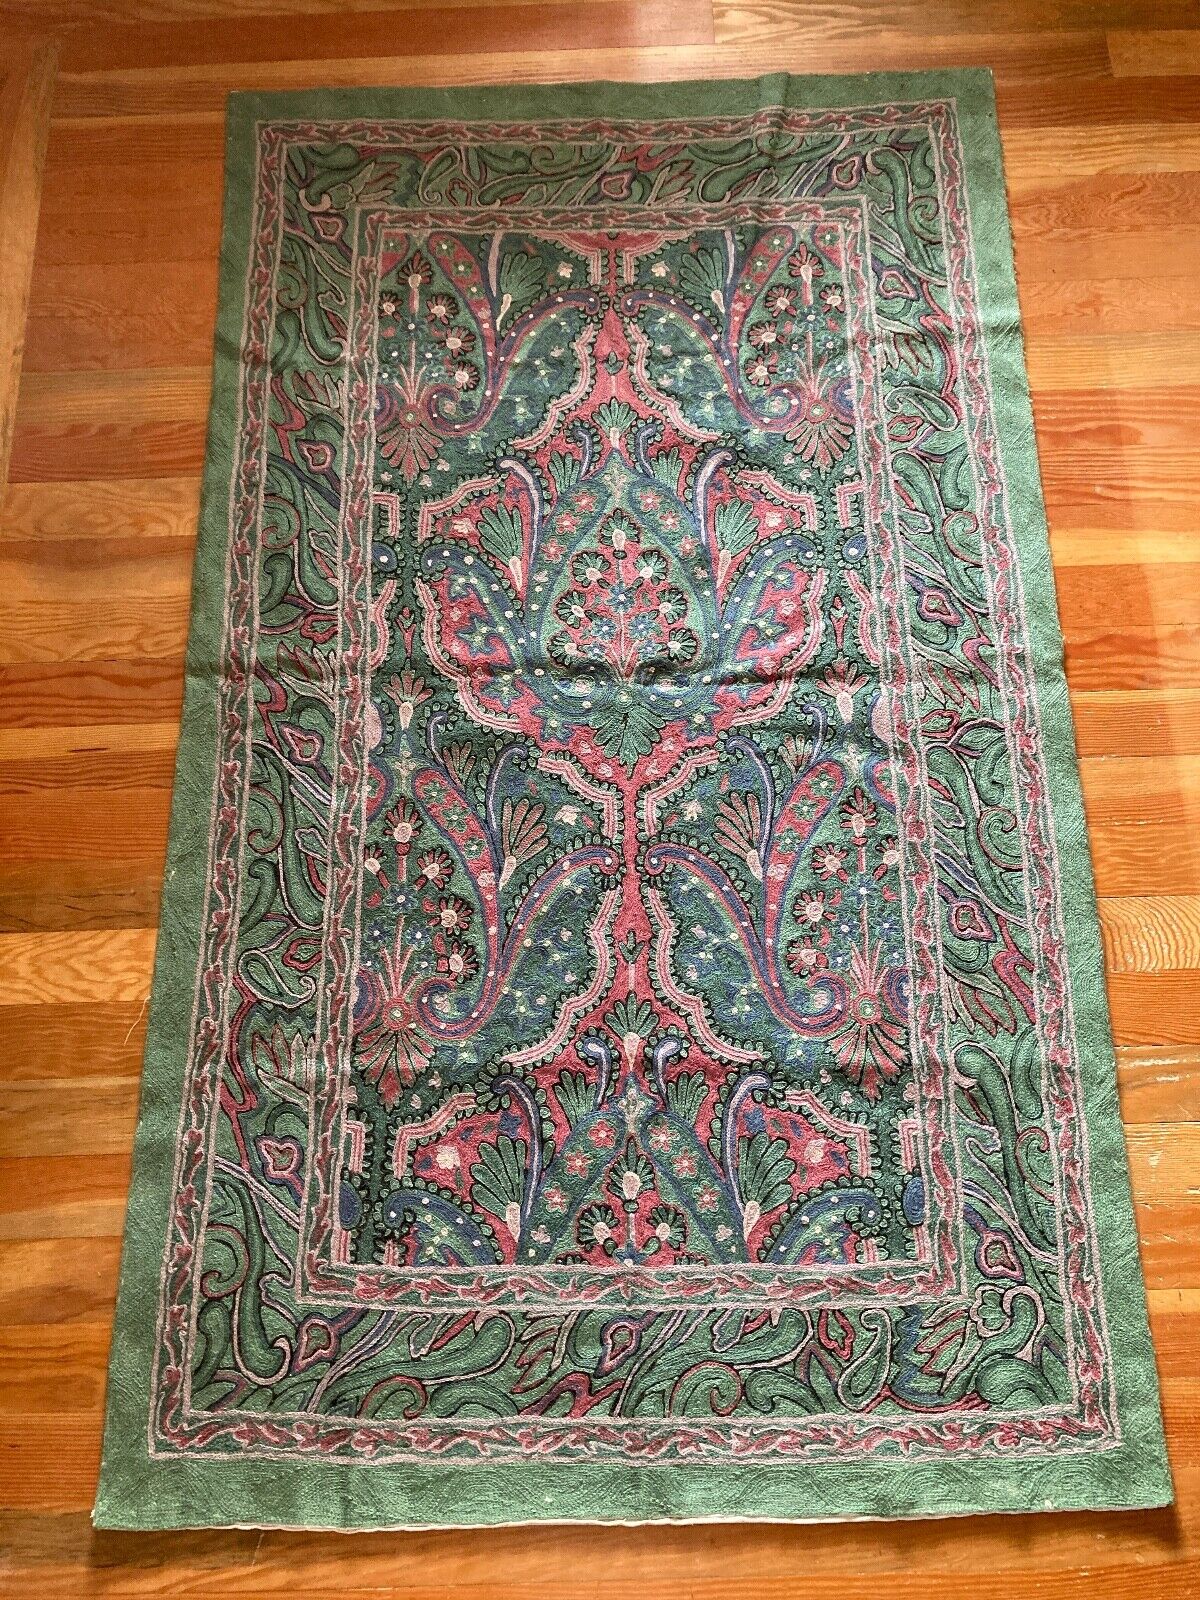 vintage chainstich rug pastel green blue pink floral paisley design